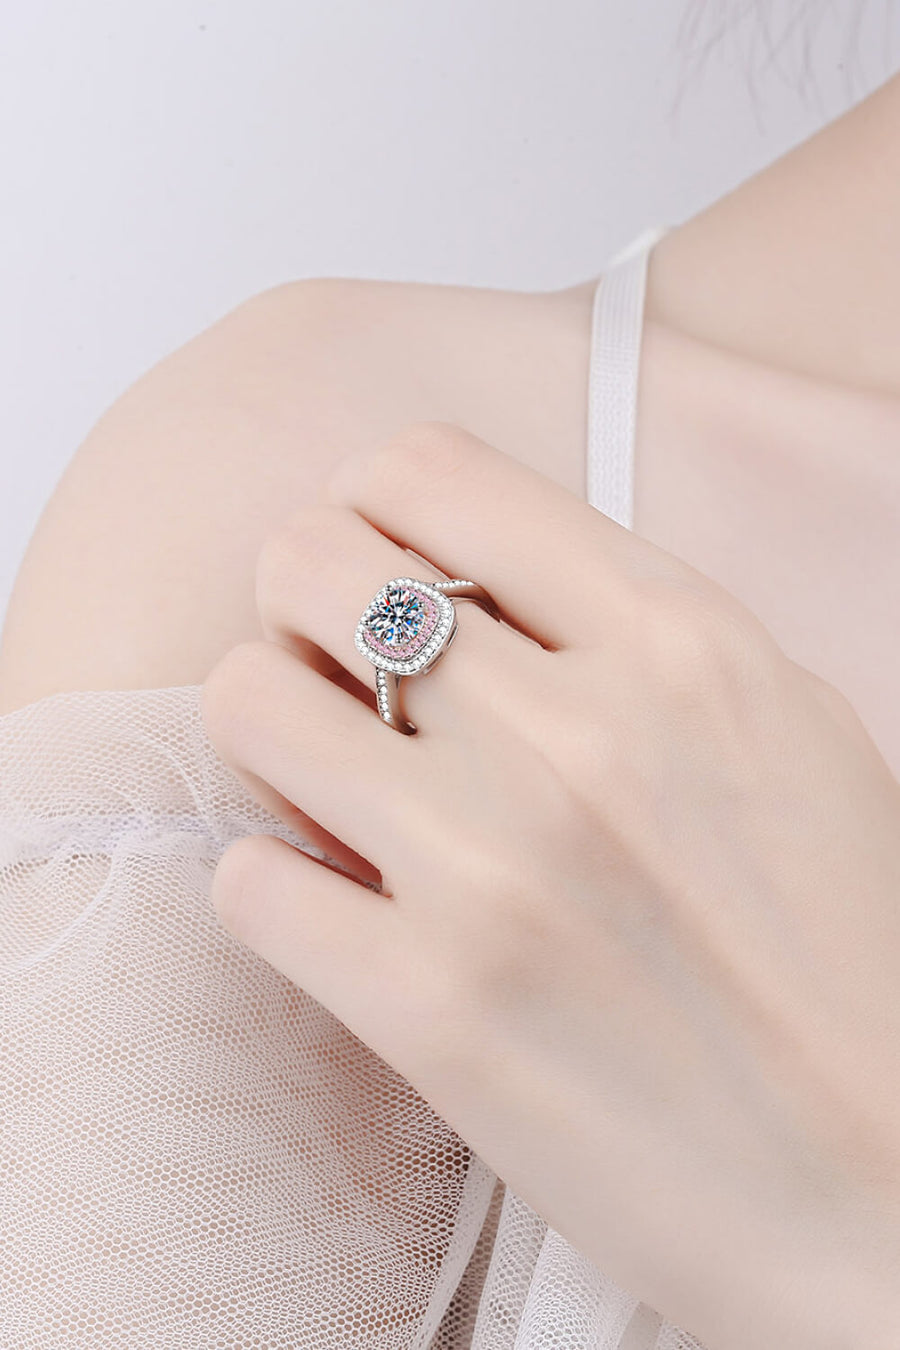 Best Diamond Ring Jewelry Gifts for Women | 1 Carat Diamond Ring - Need You Now | MASON New York